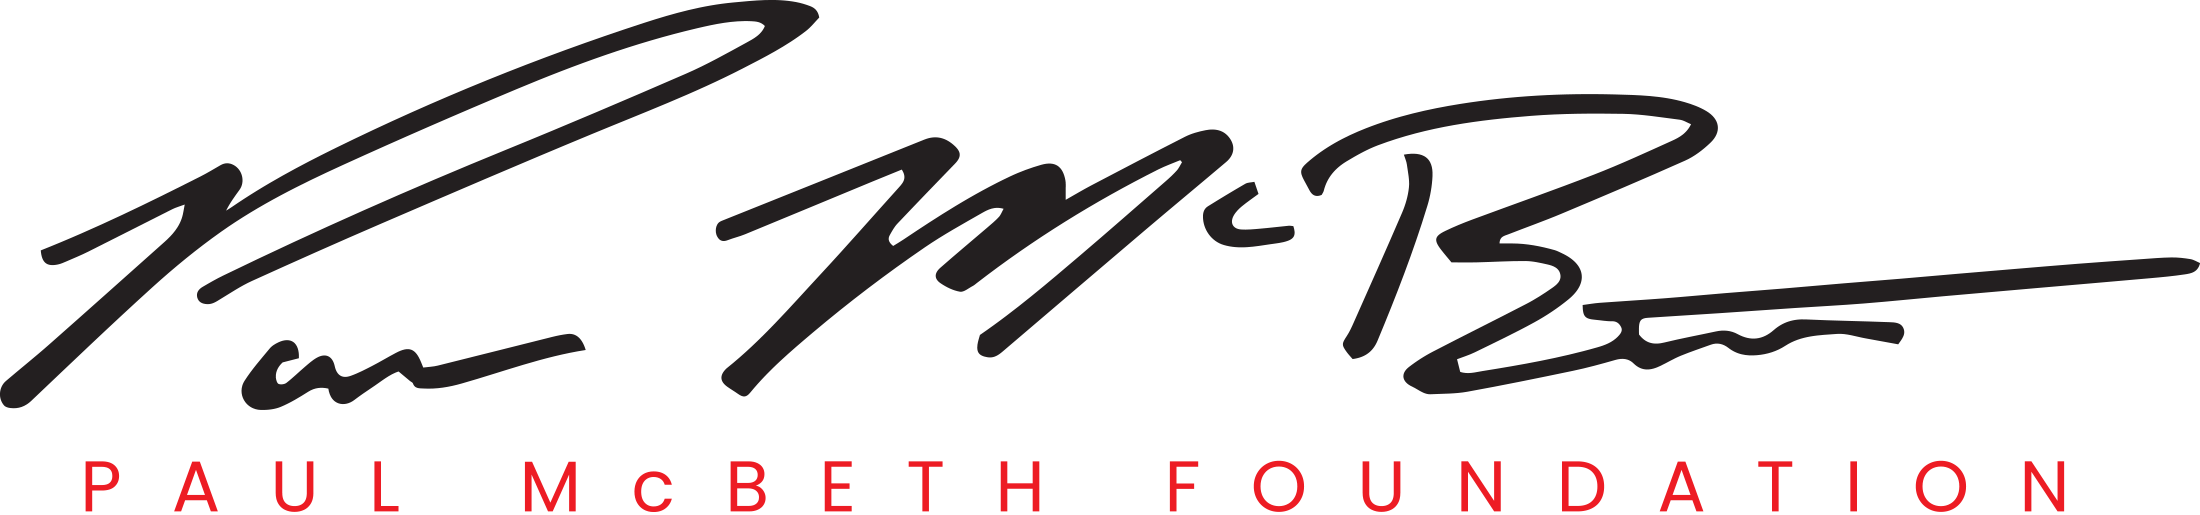 Paul McBeth Foundation Logo